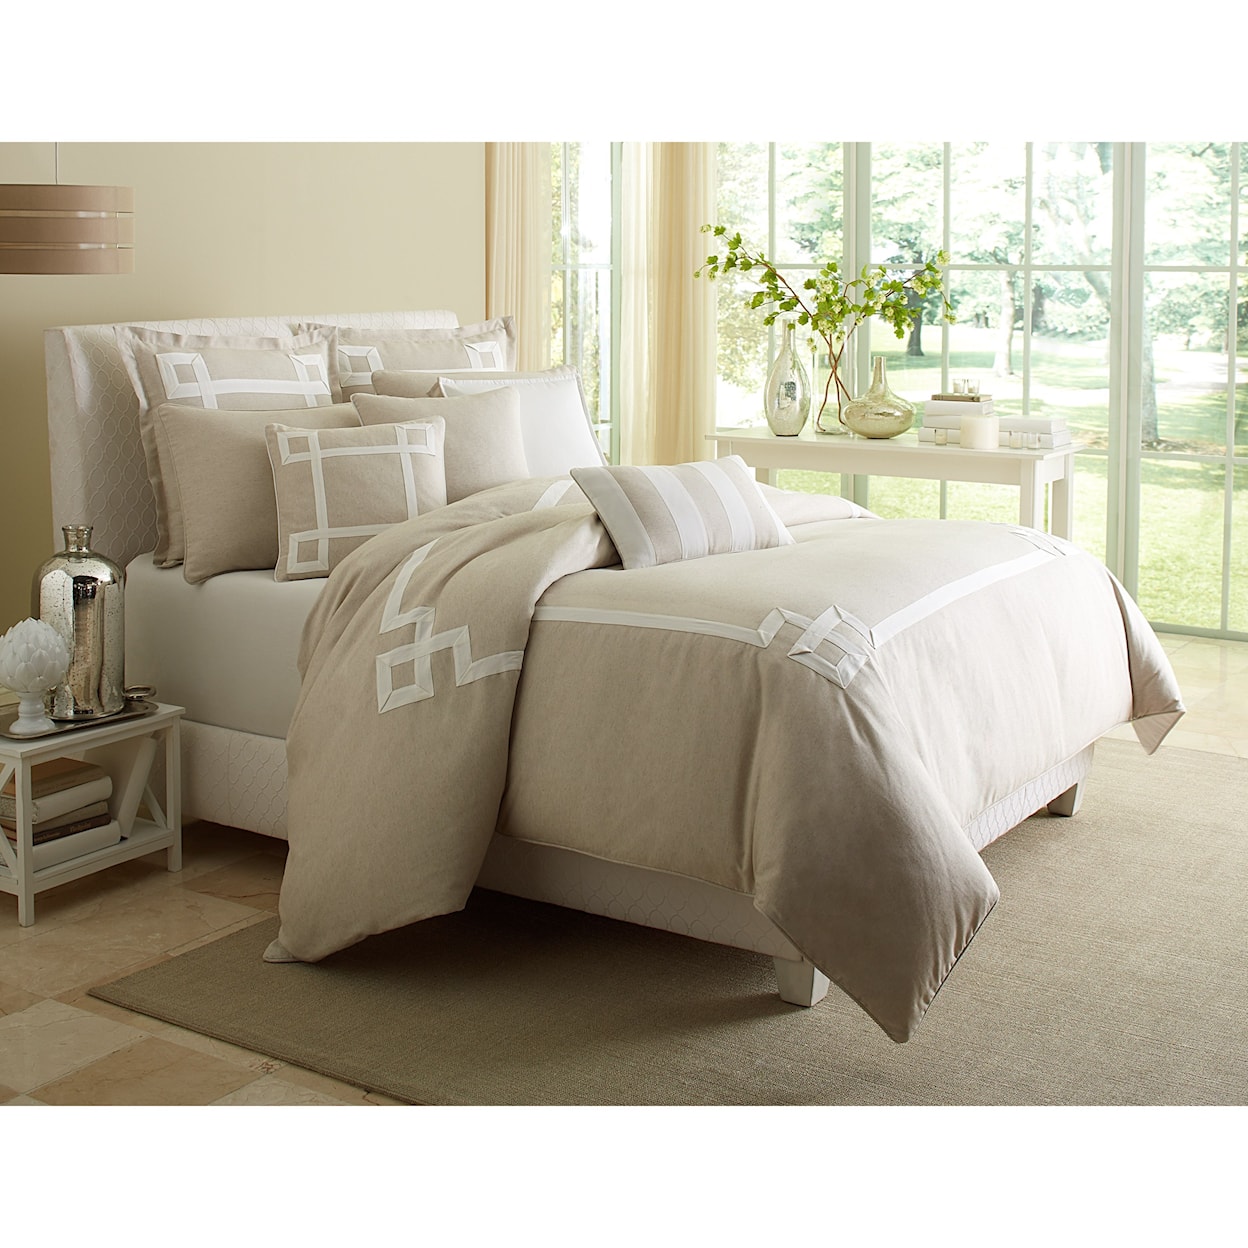 Michael Amini Distinctive Bedding Designs Queen Comforter Set